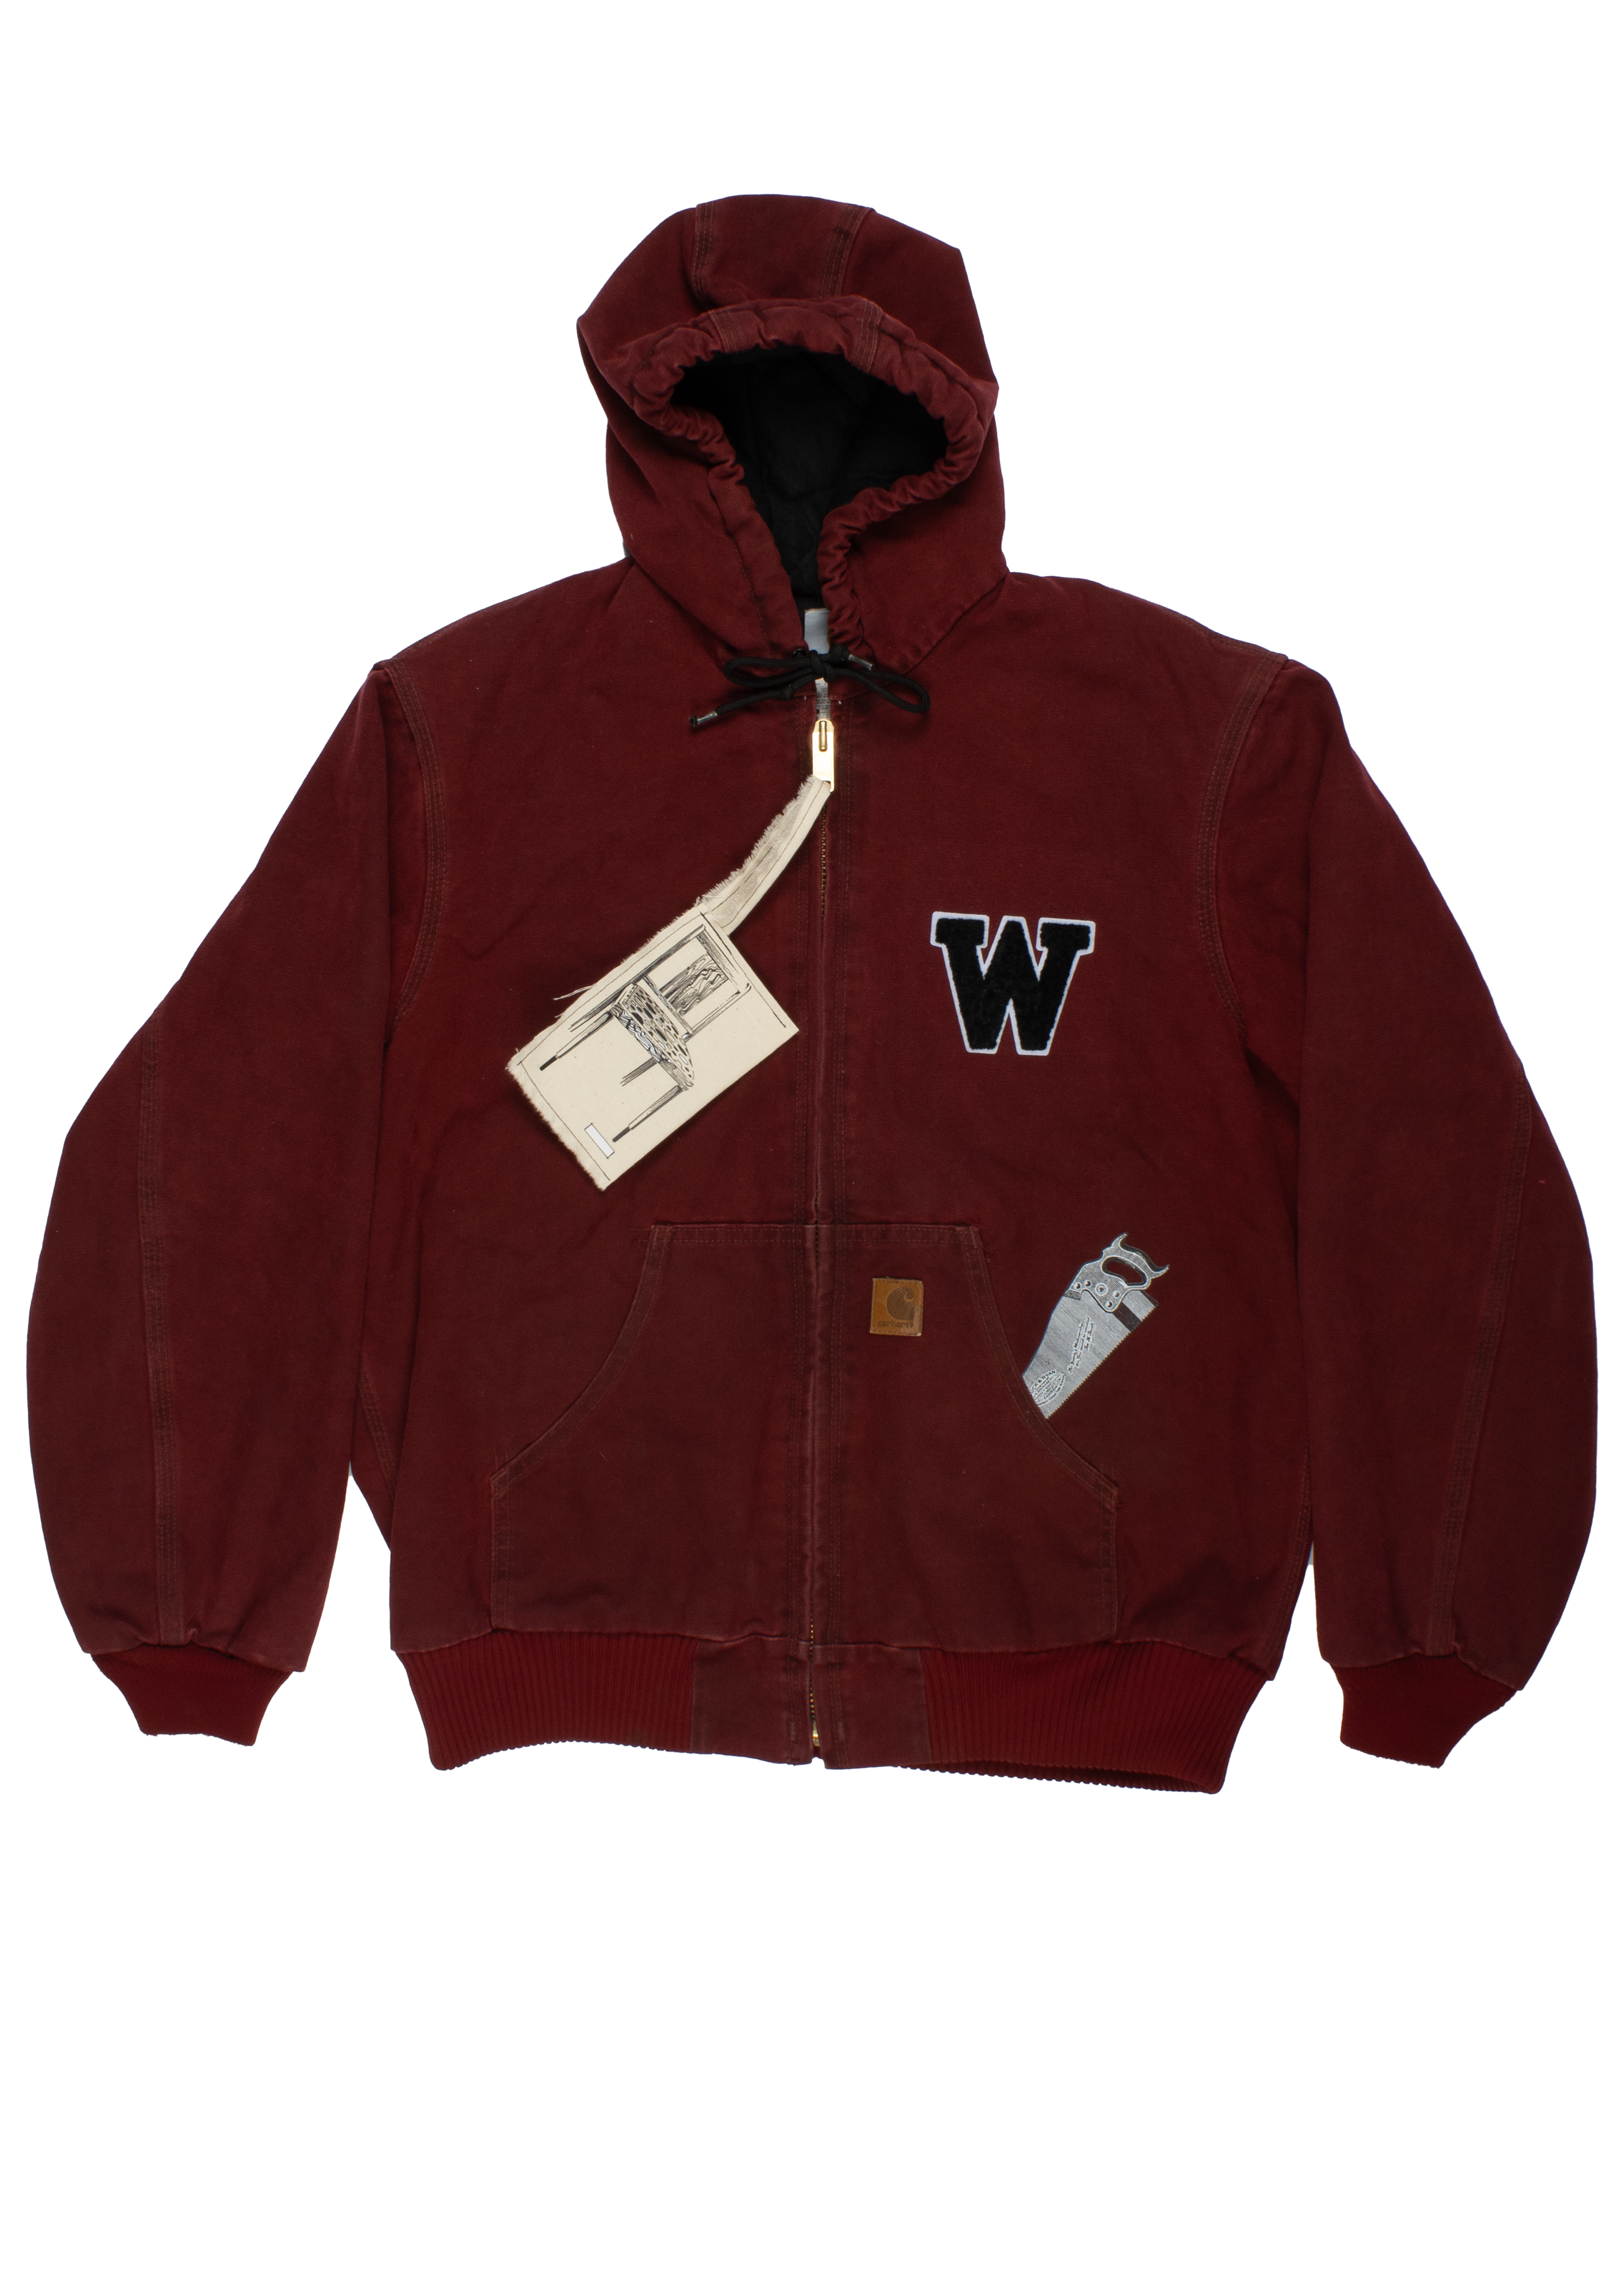 WW001 - Woodworker Carhartt Jacket x 1